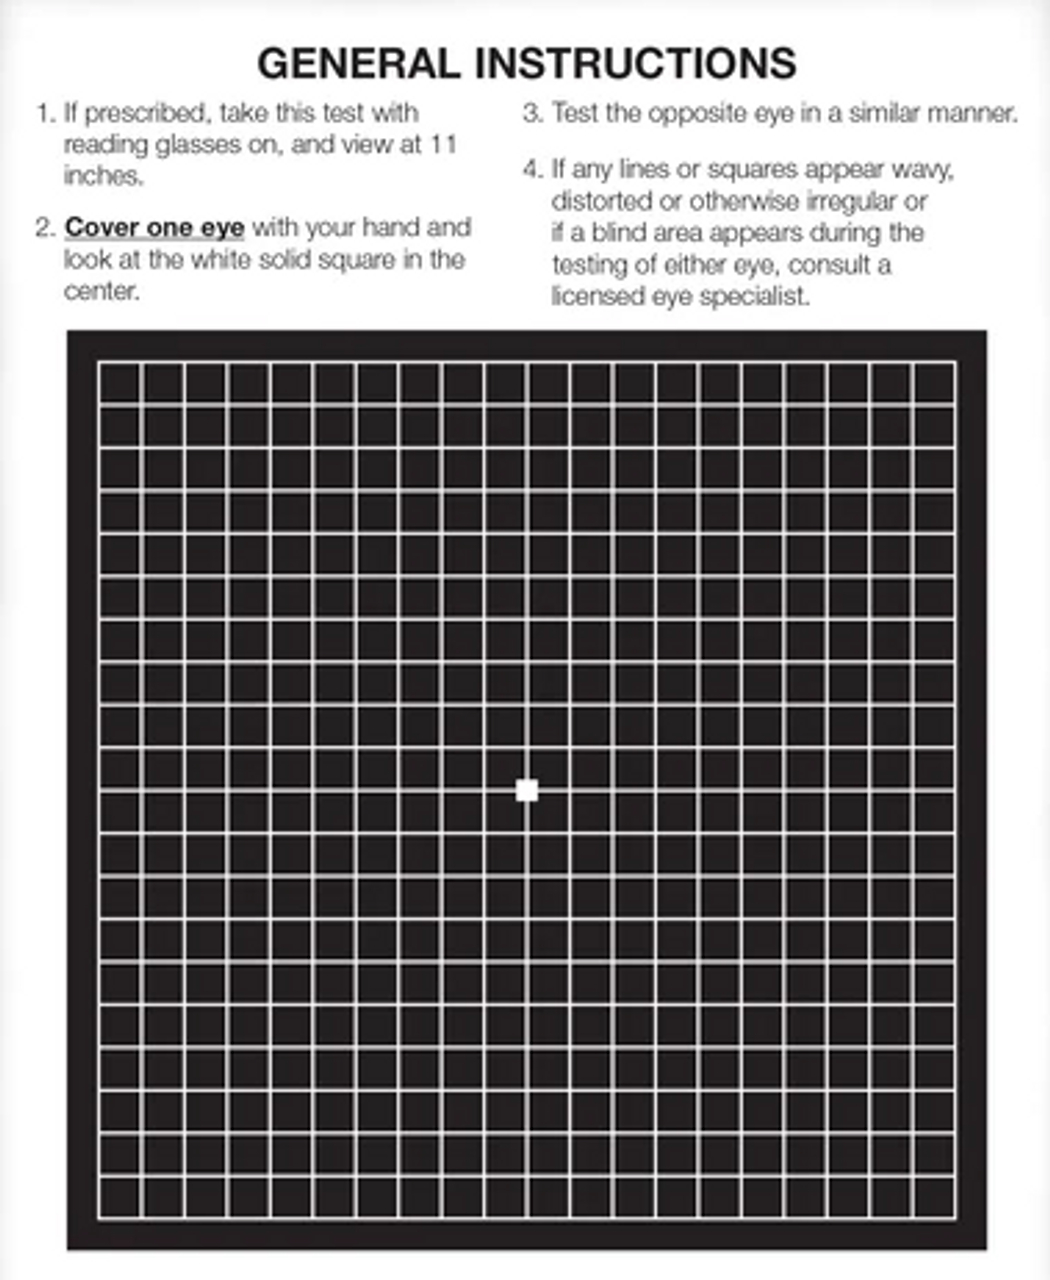 Amsler Grid - Free Printable PDF, Eye Specialist Institute